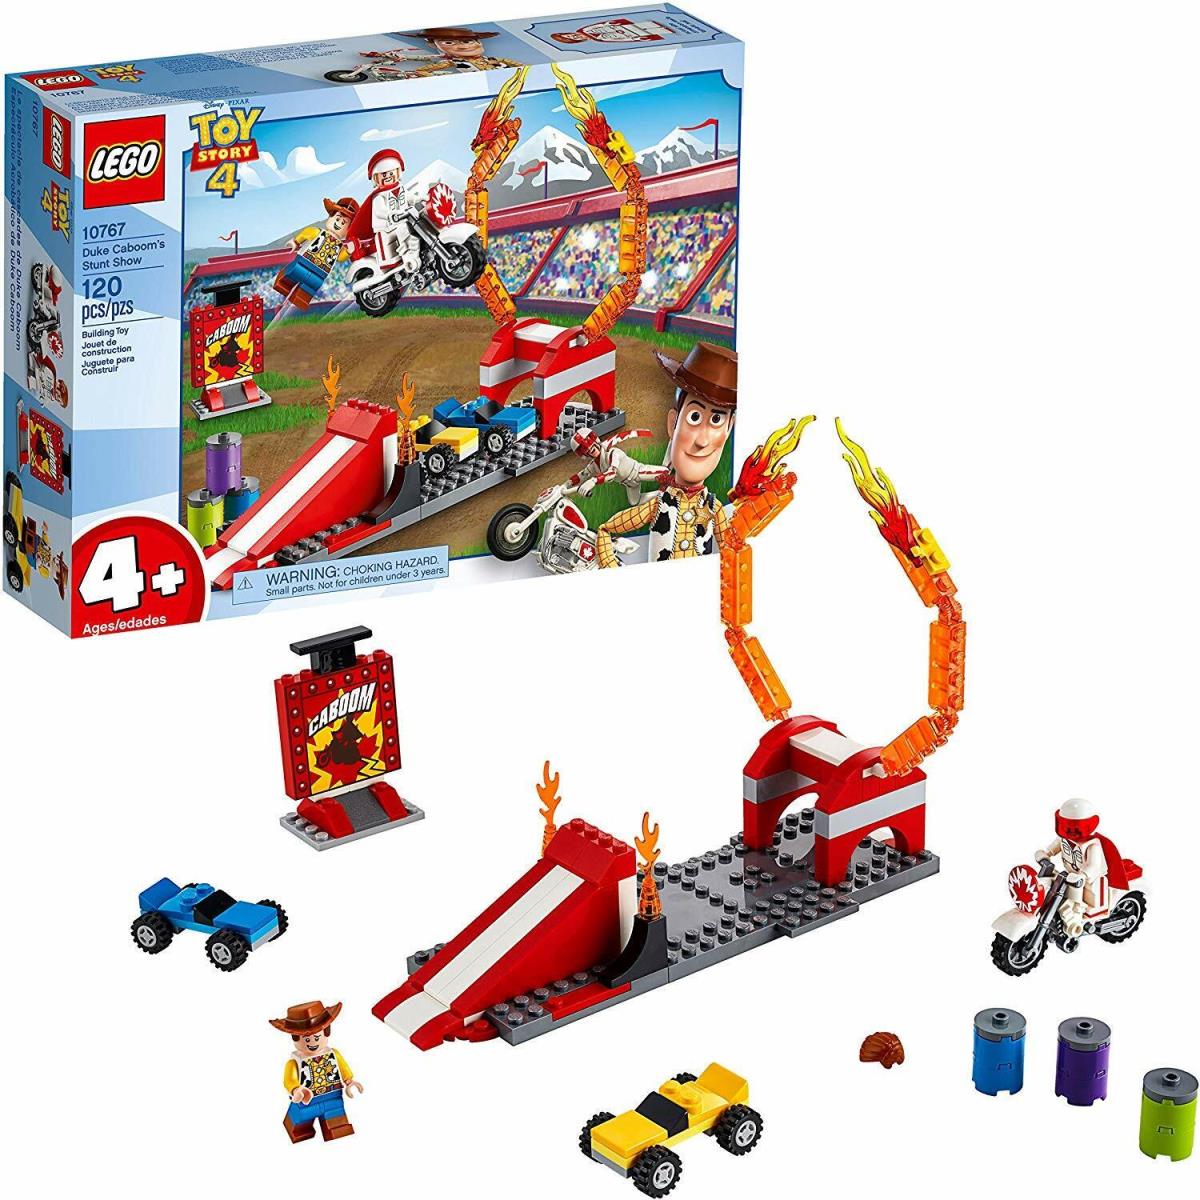 Lego Duke Caboom s Stunt Show Building Kit 120-Piece Set Toy Story 4 Kids Toys